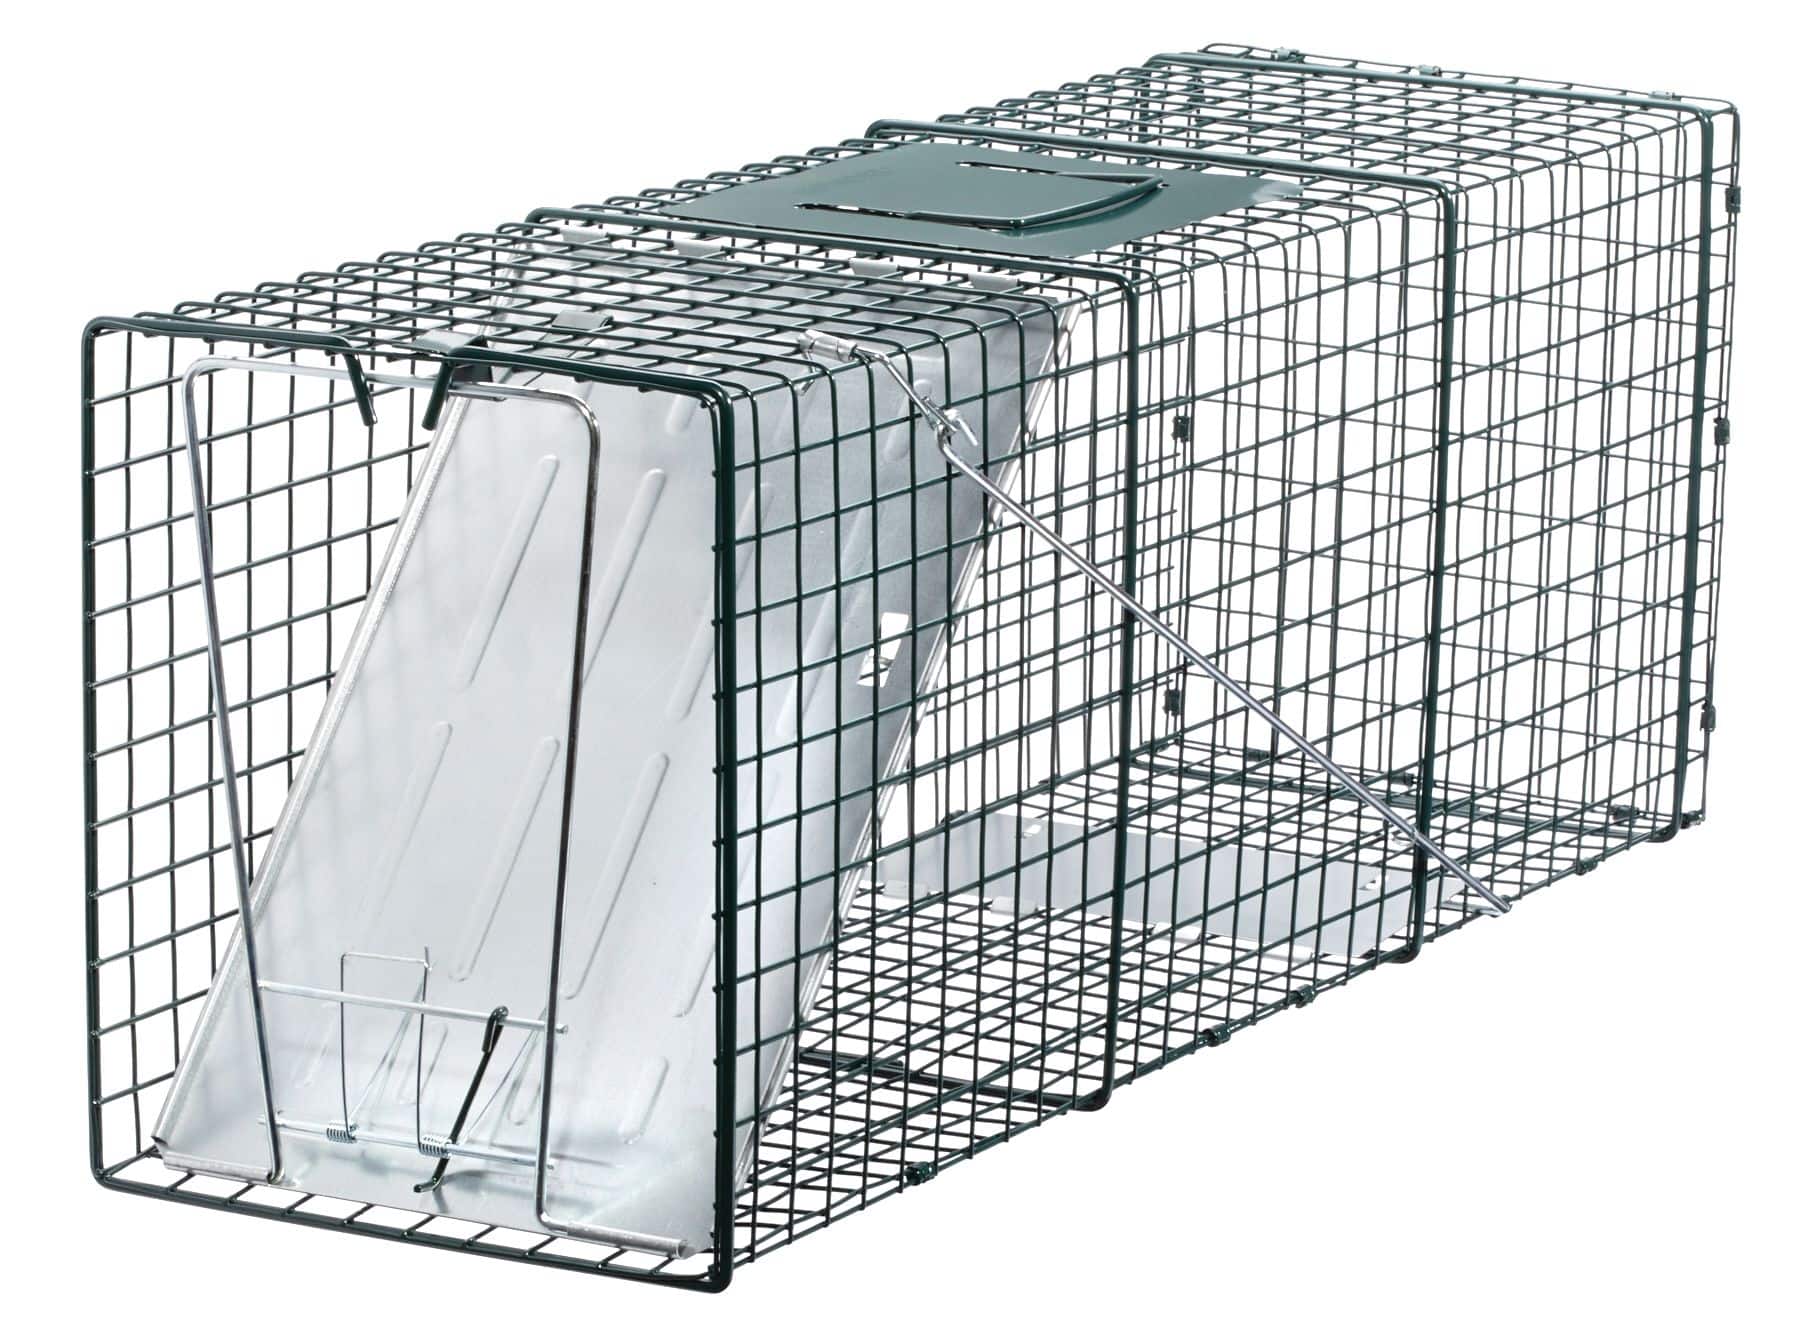 Cage piege à prix mini - Page 3